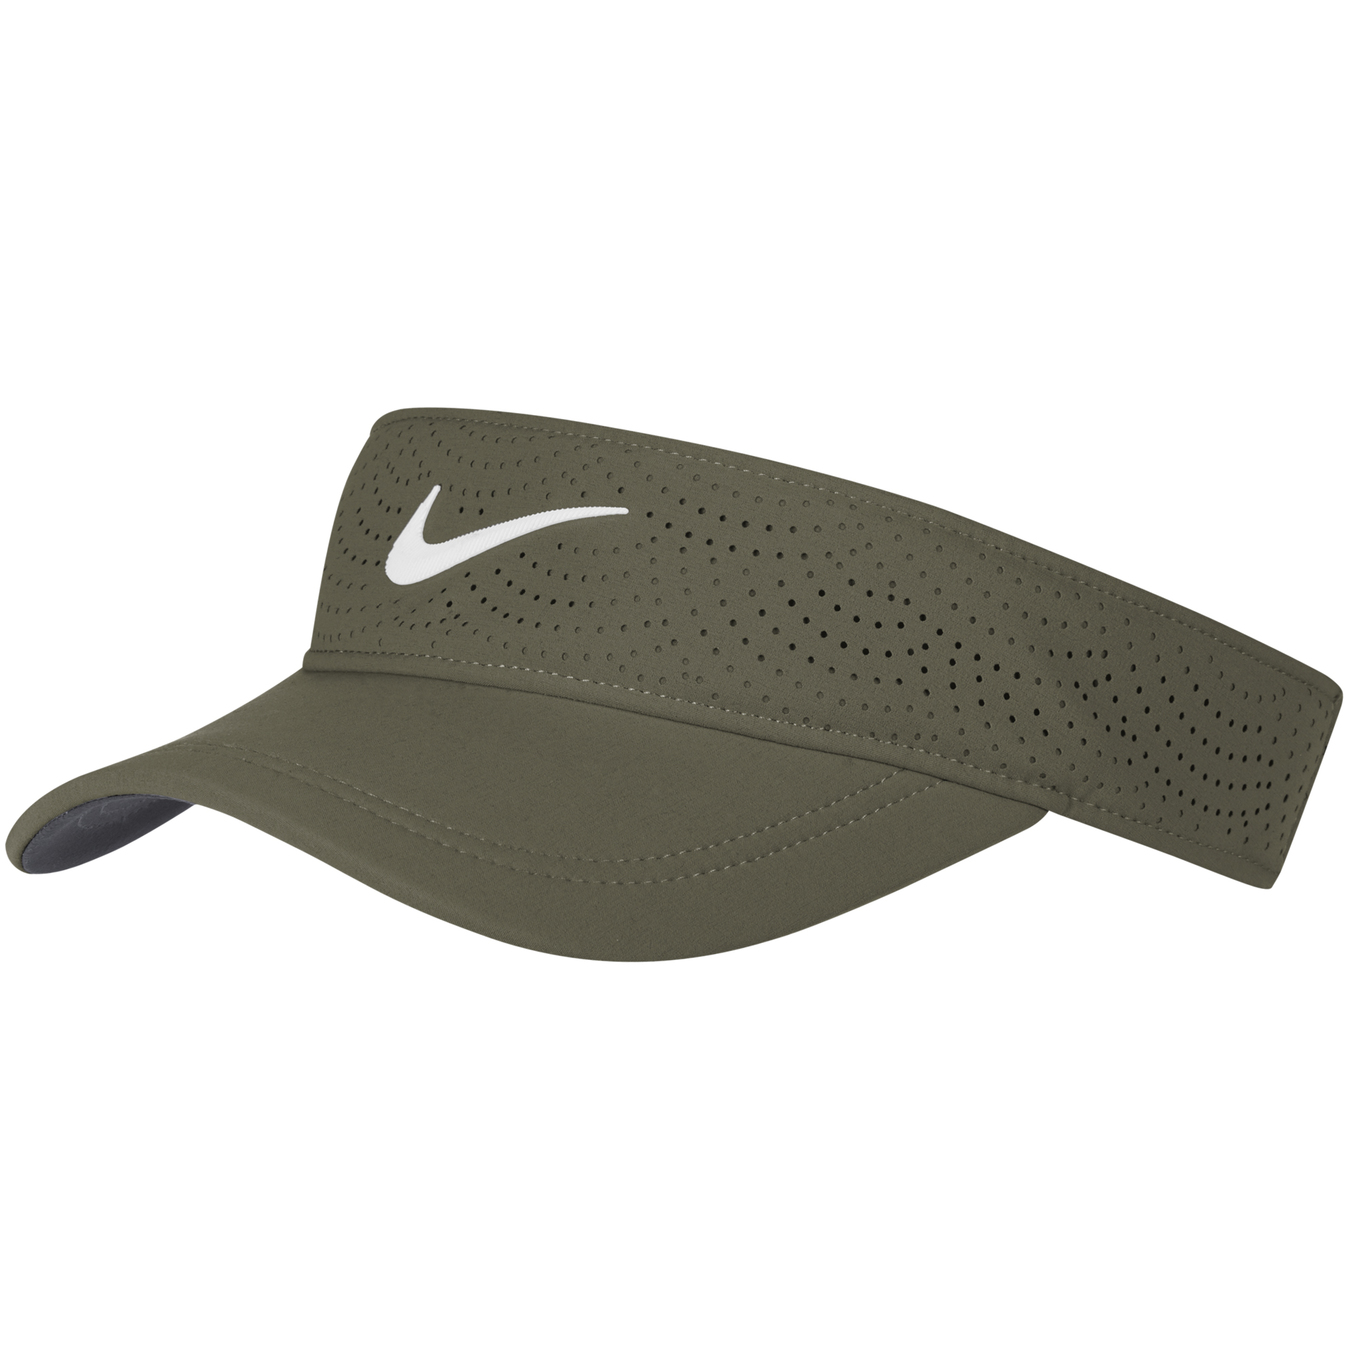 Nike Women's Nike Aerobill Golf Visor, Medium Olive/Anthracite